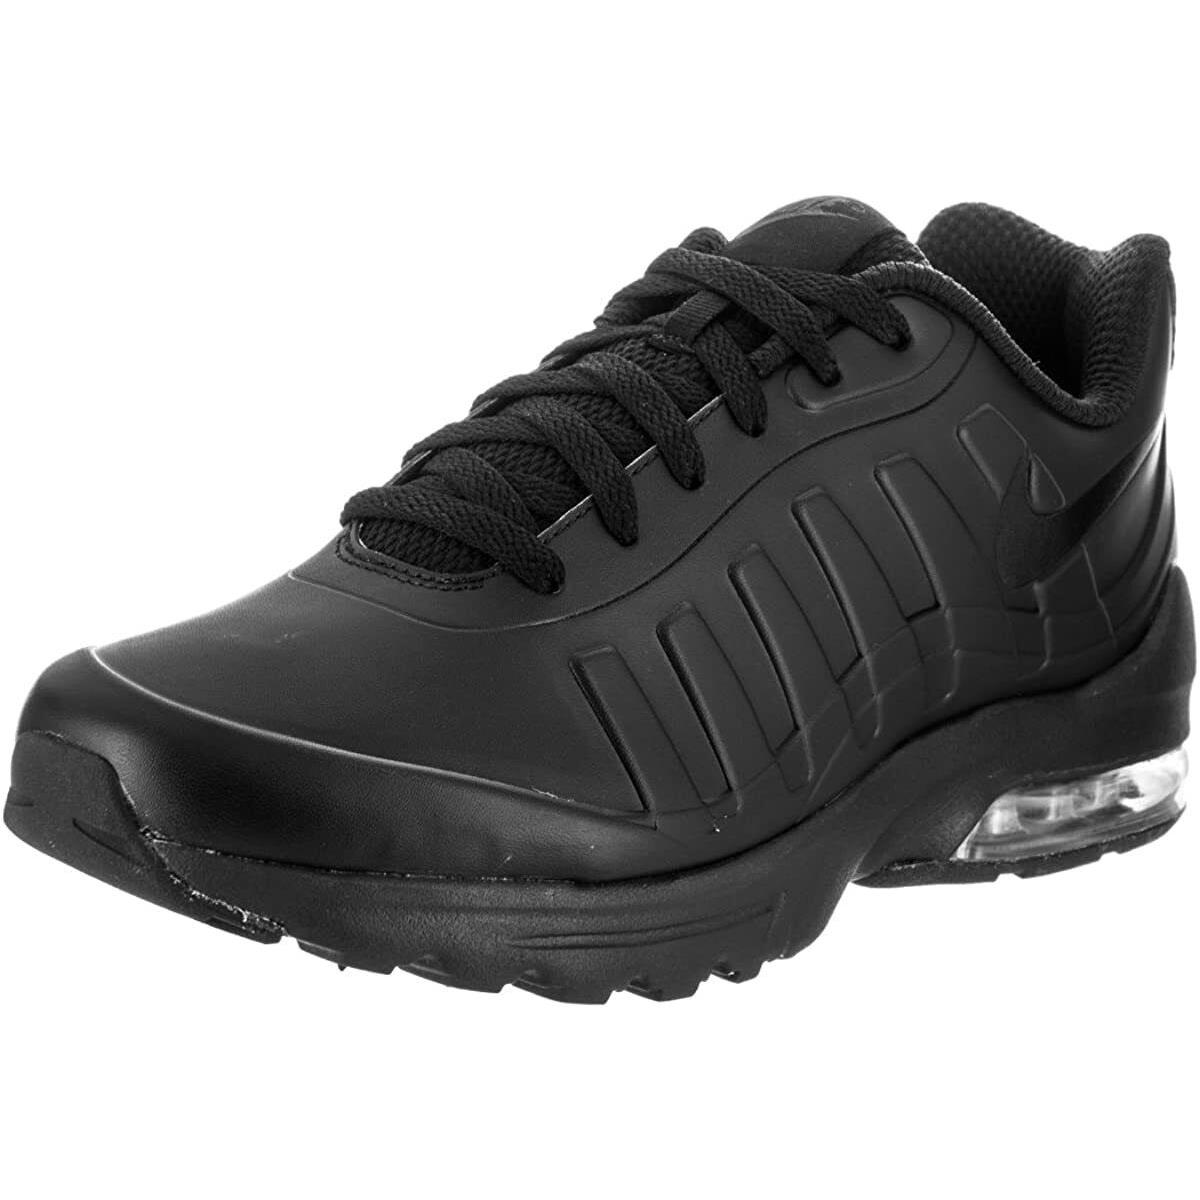 Nike Men s Air Max Invigor SL Running Shoes Black Anthracite Size 8.5 - Black